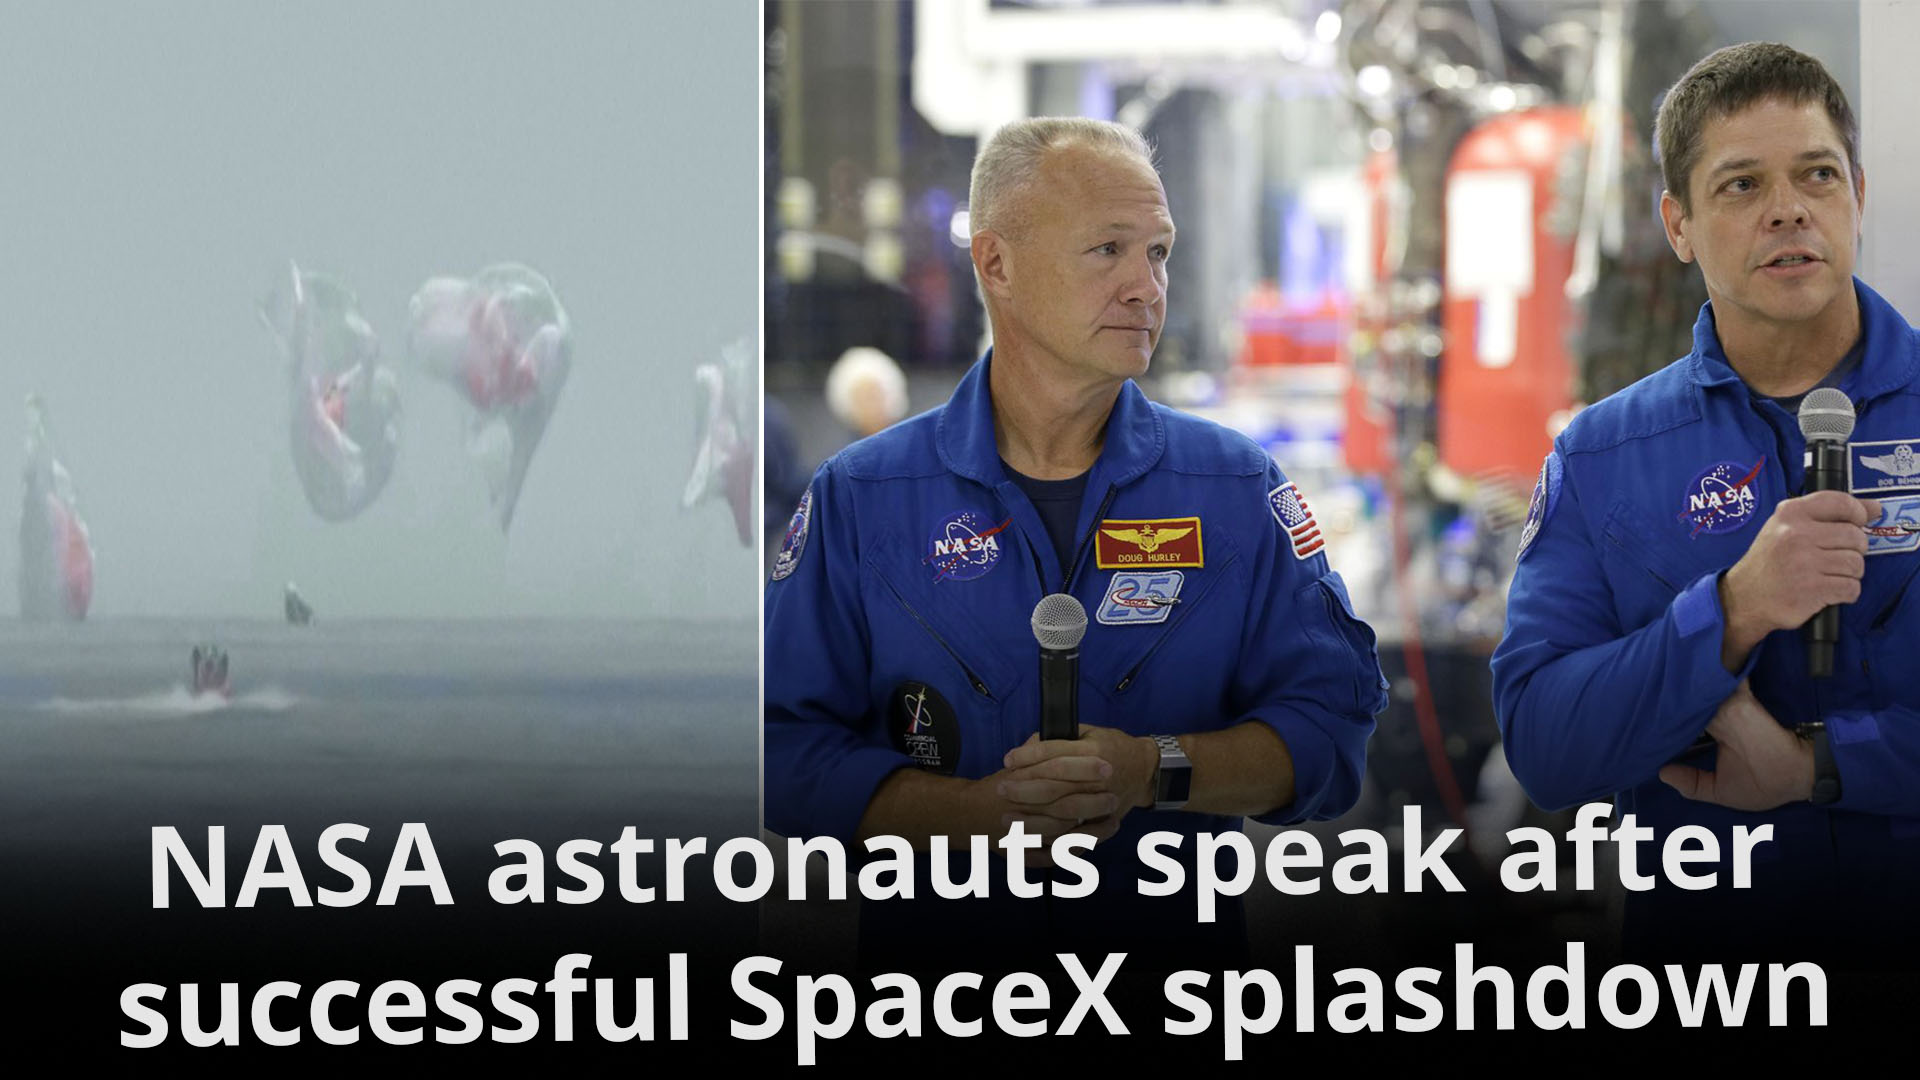 SpaceXs Dragon capsule brings backs NASA astronauts, achieves milestone